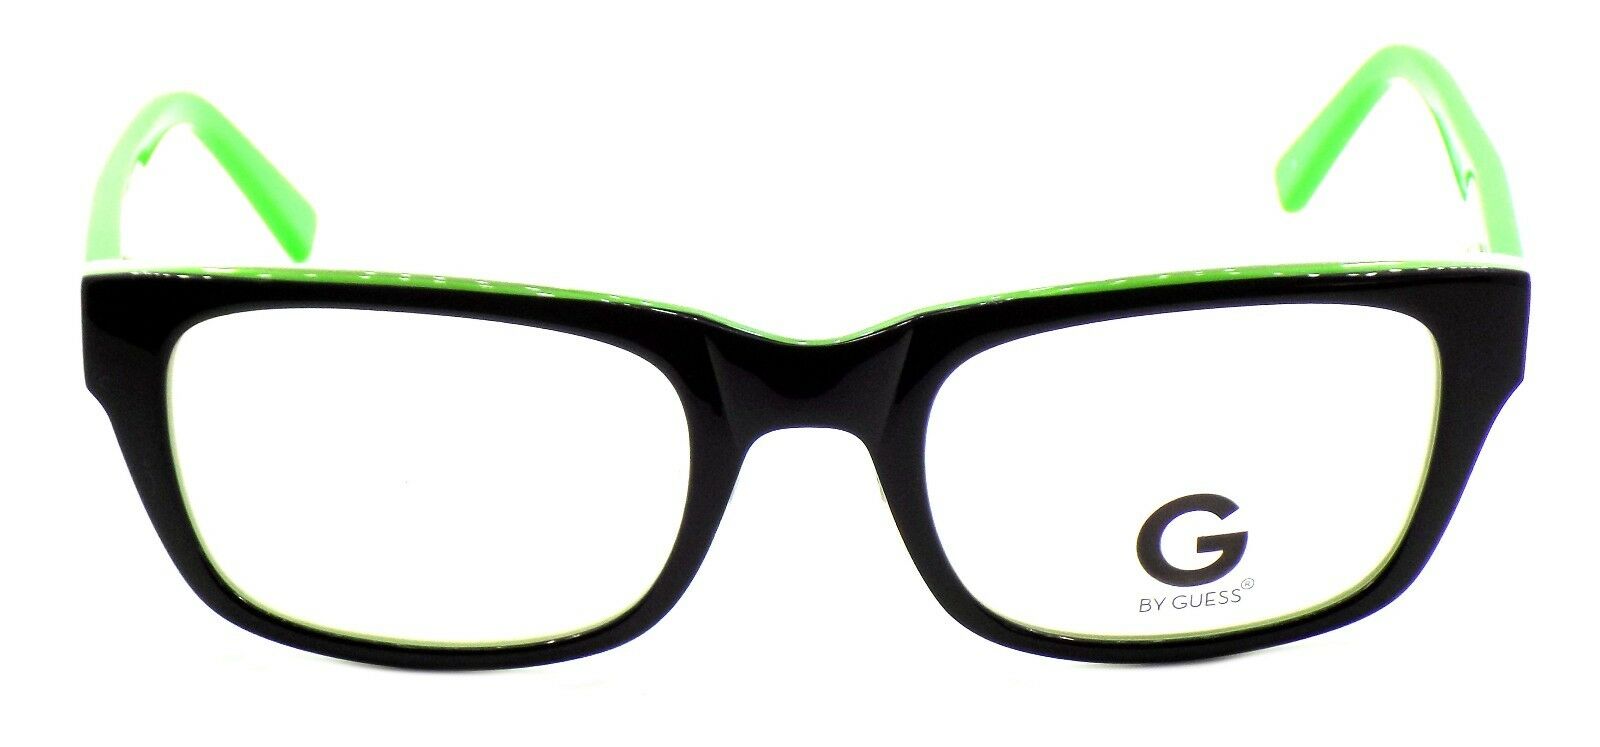 2-G by Guess GGA203 BLKGRN Men's ASIAN FIT Eyeglasses Frames 54-22-140 Black +CASE-715583639386-IKSpecs